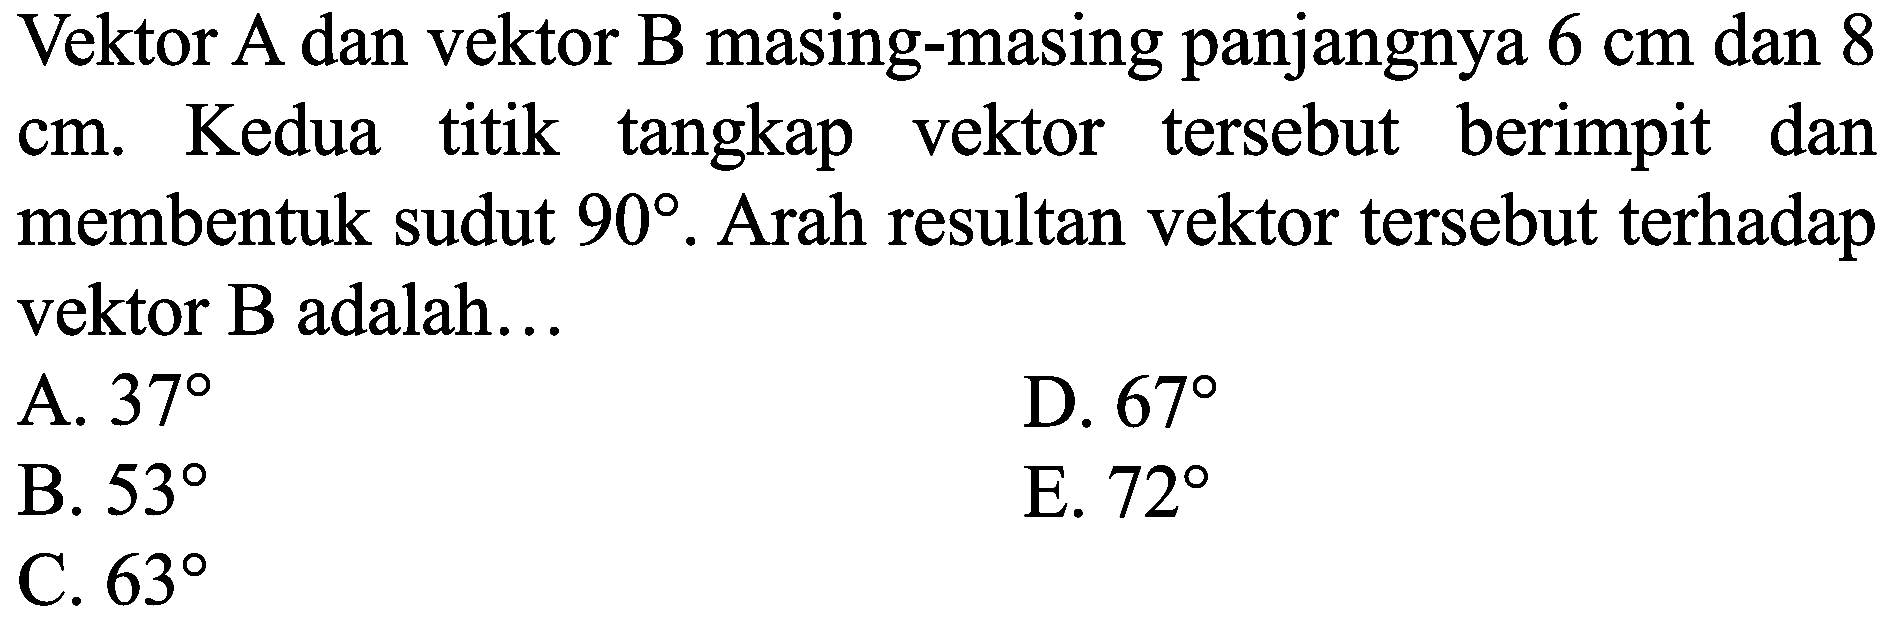 Vektor A dan vektor B masing-masing panjangnya  6 cm  dan 8  cm . Kedua titik tangkap vektor tersebut berimpit dan membentuk sudut  90 . Arah resultan vektor tersebut terhadap vektor B adalah...